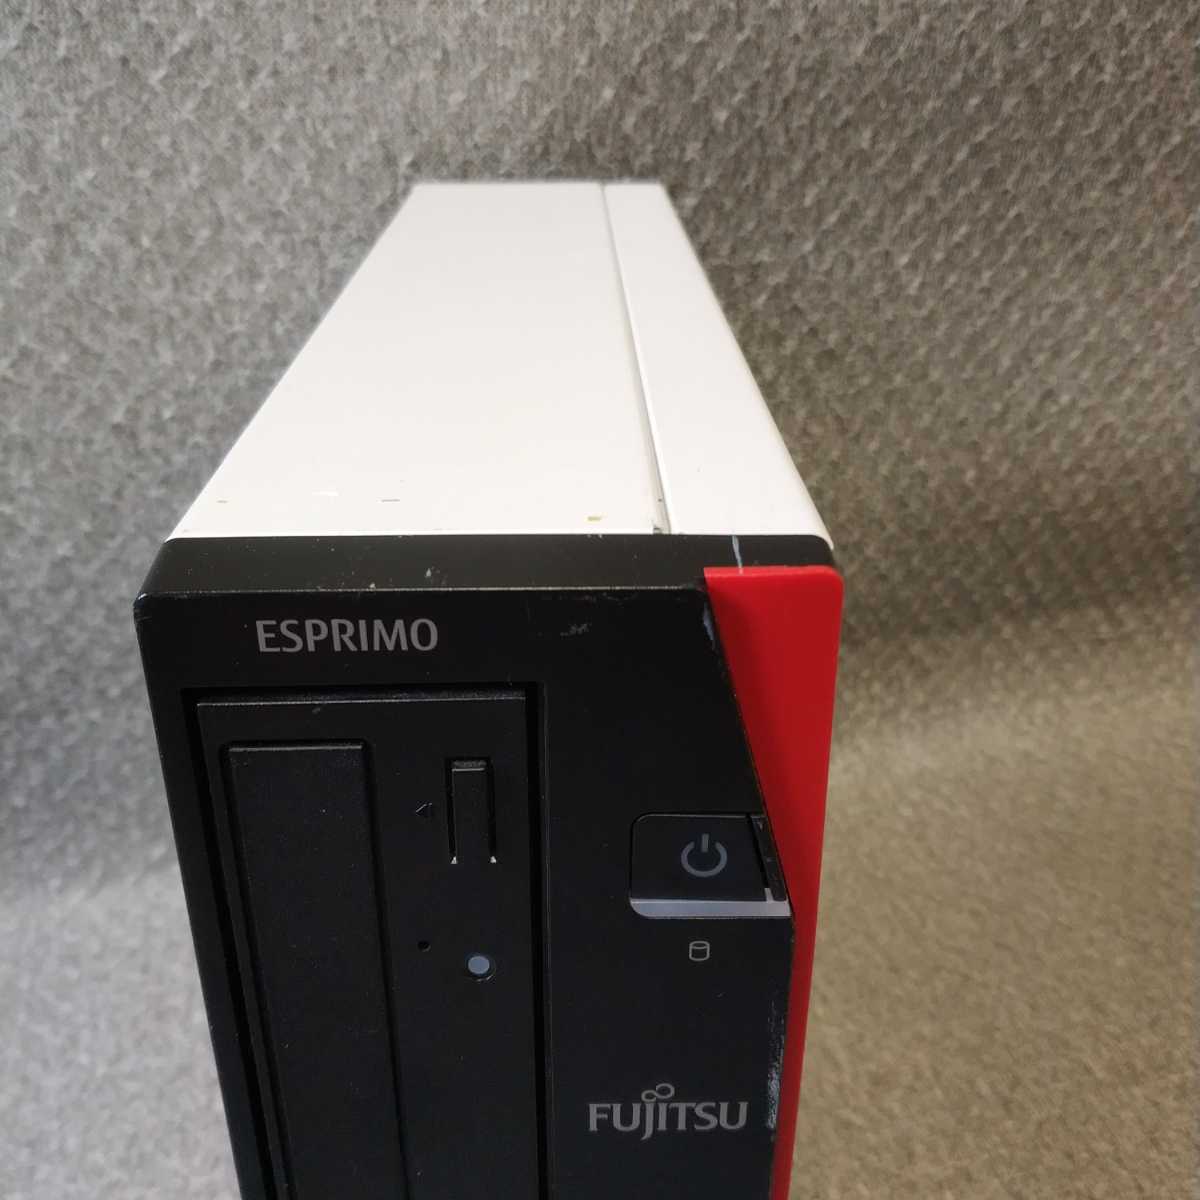  новый товар SSD120GB * FUJITSU Fujitsu D587/S FMVD3404R * no. 6 поколение Core i3-6100 3.70GHz/ память 4GB/USB3.0/Win 10/Windows 7 Professional/T046C